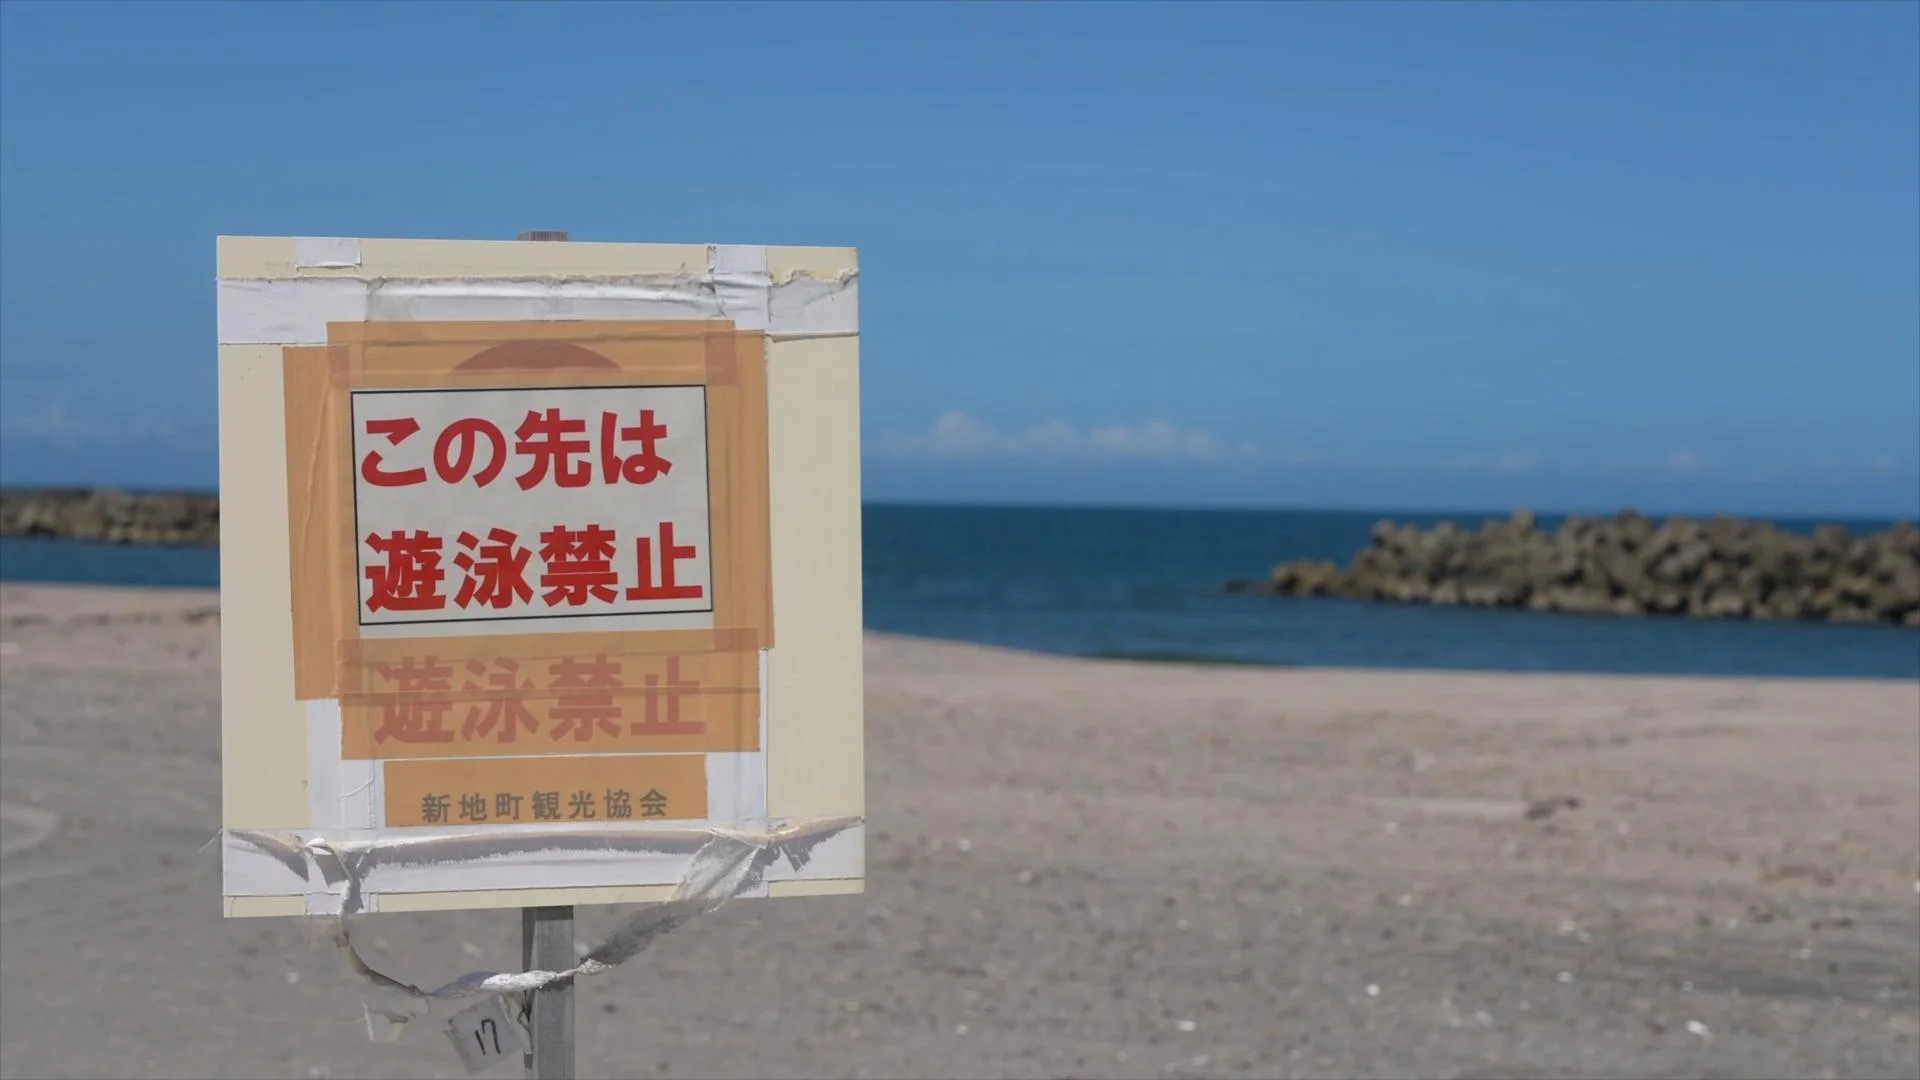 GLOBALink : ญี่ปุ่นเริ่มปล่อย 'น้ำปนเปื้อนนิวเคลียร์' ลงทะเล แม้มีเสียงคัดค้าน